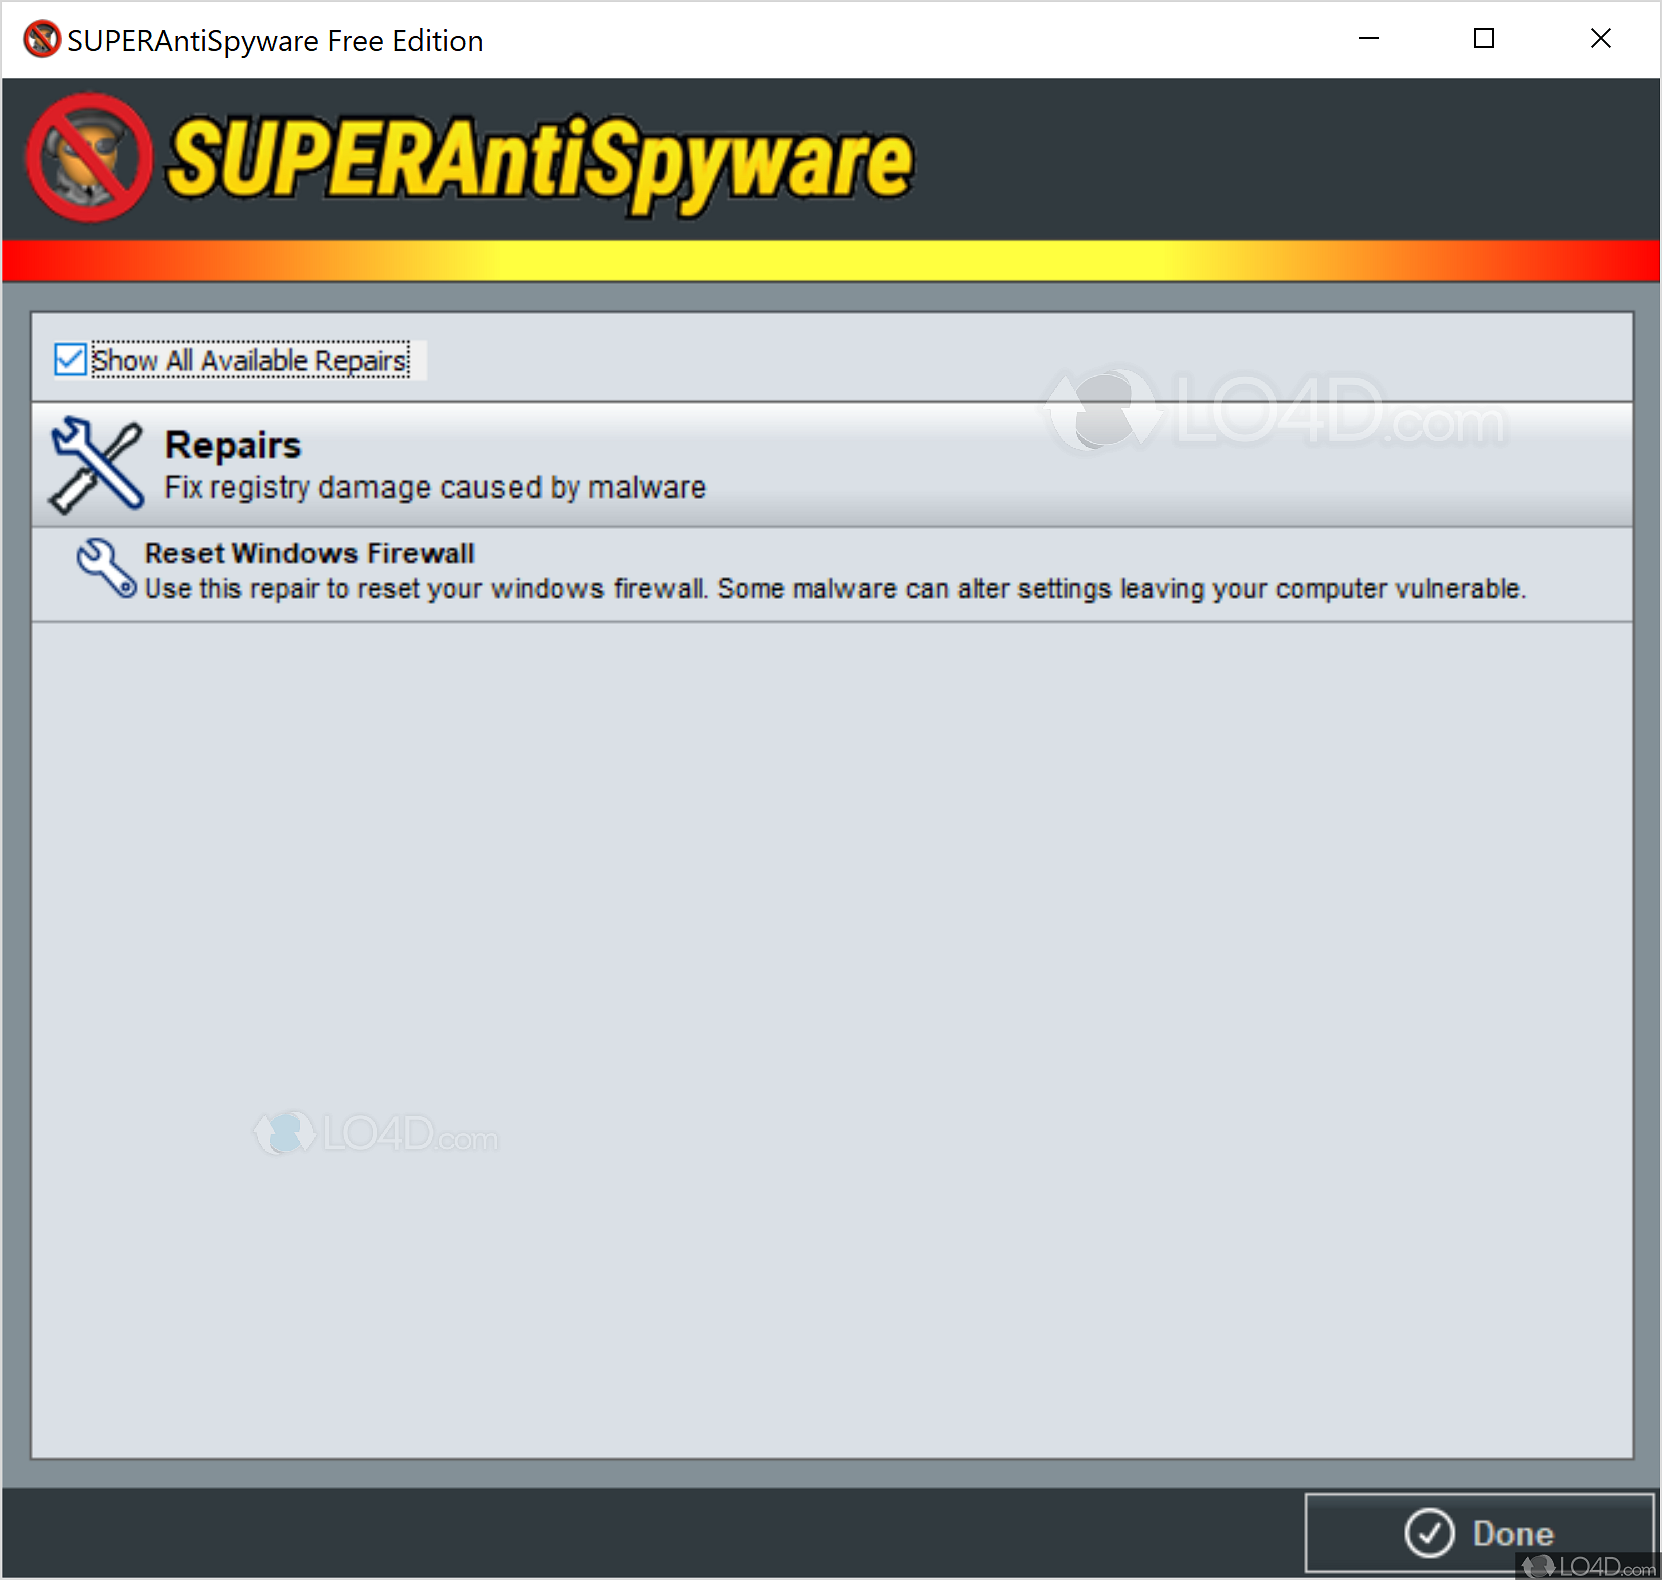 SuperAntiSpyware Professional X 10.0.1254 free downloads